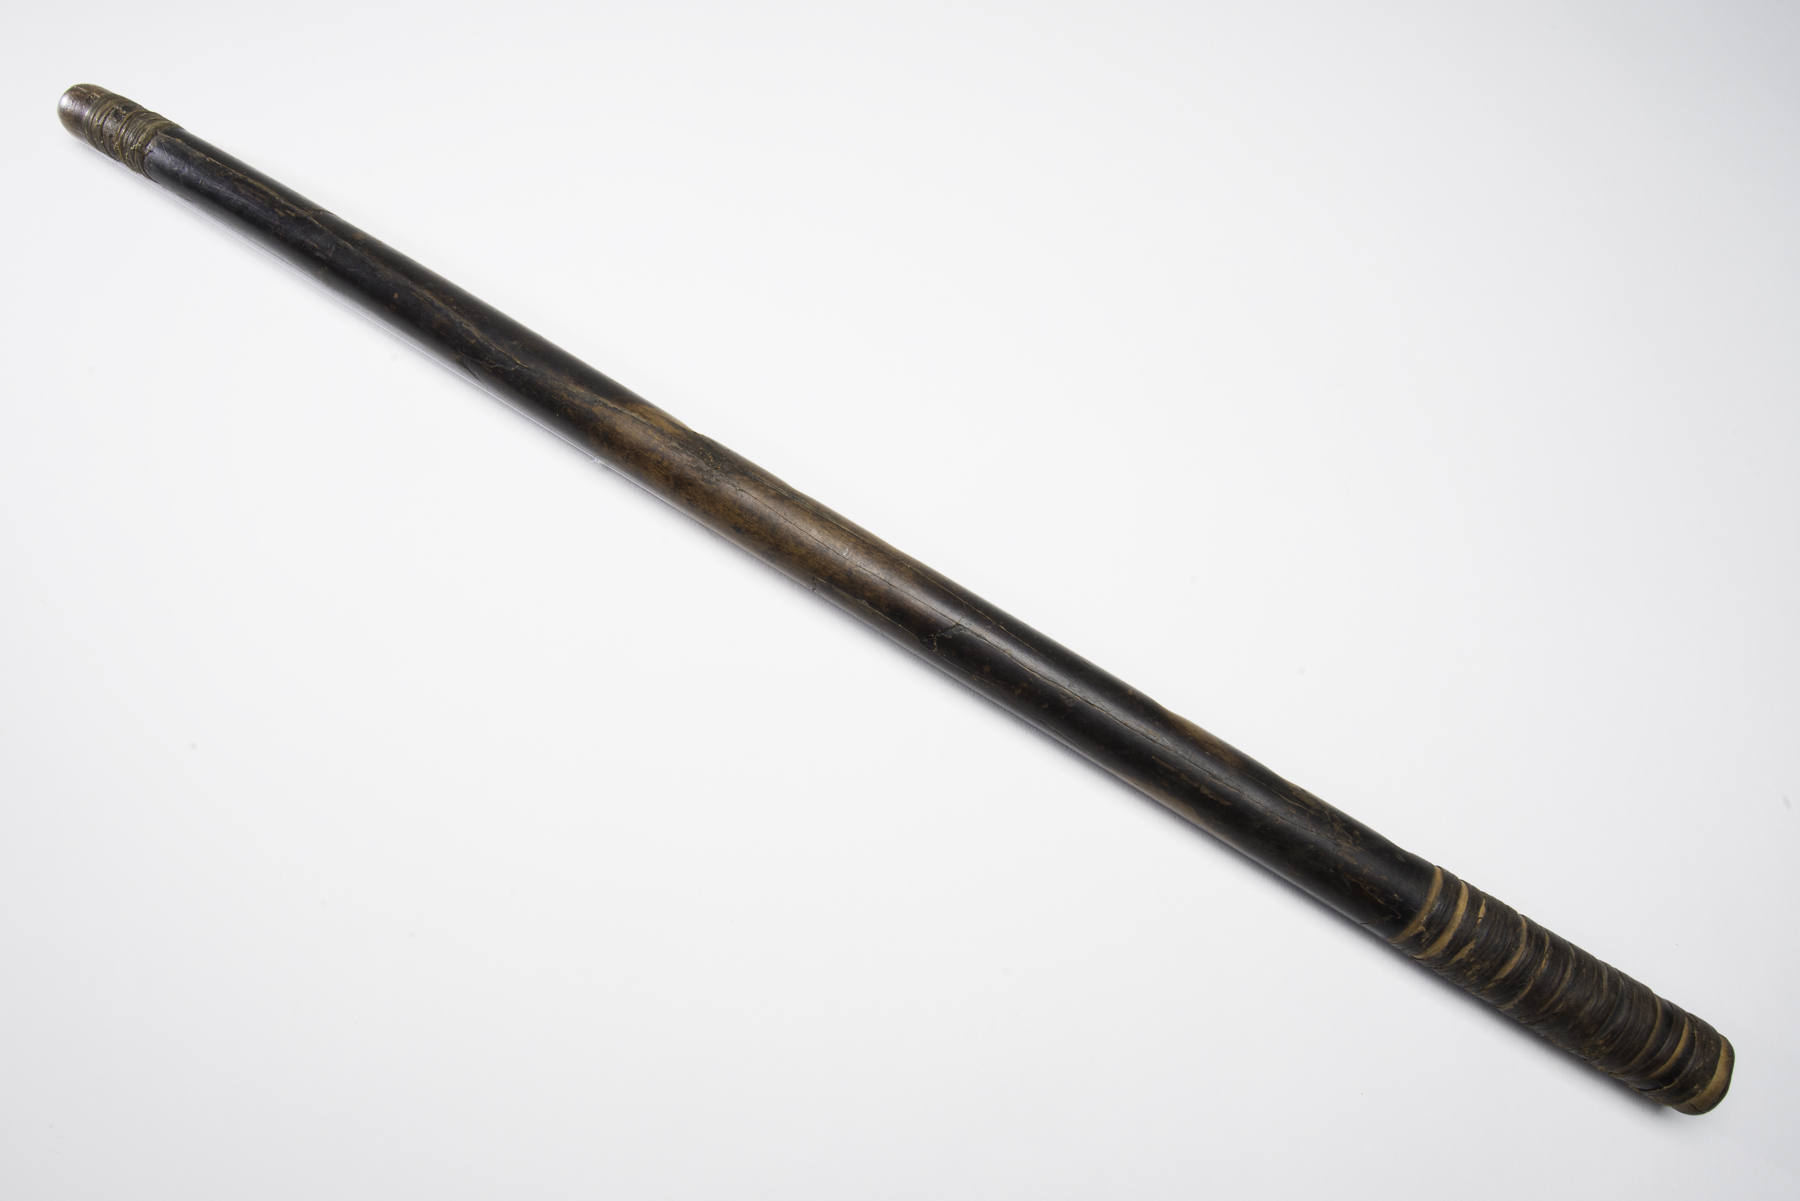 A-14550, 620–670 CE (Common Era=AD). Length: 68.5 cm, diameter: 2.8 cm.